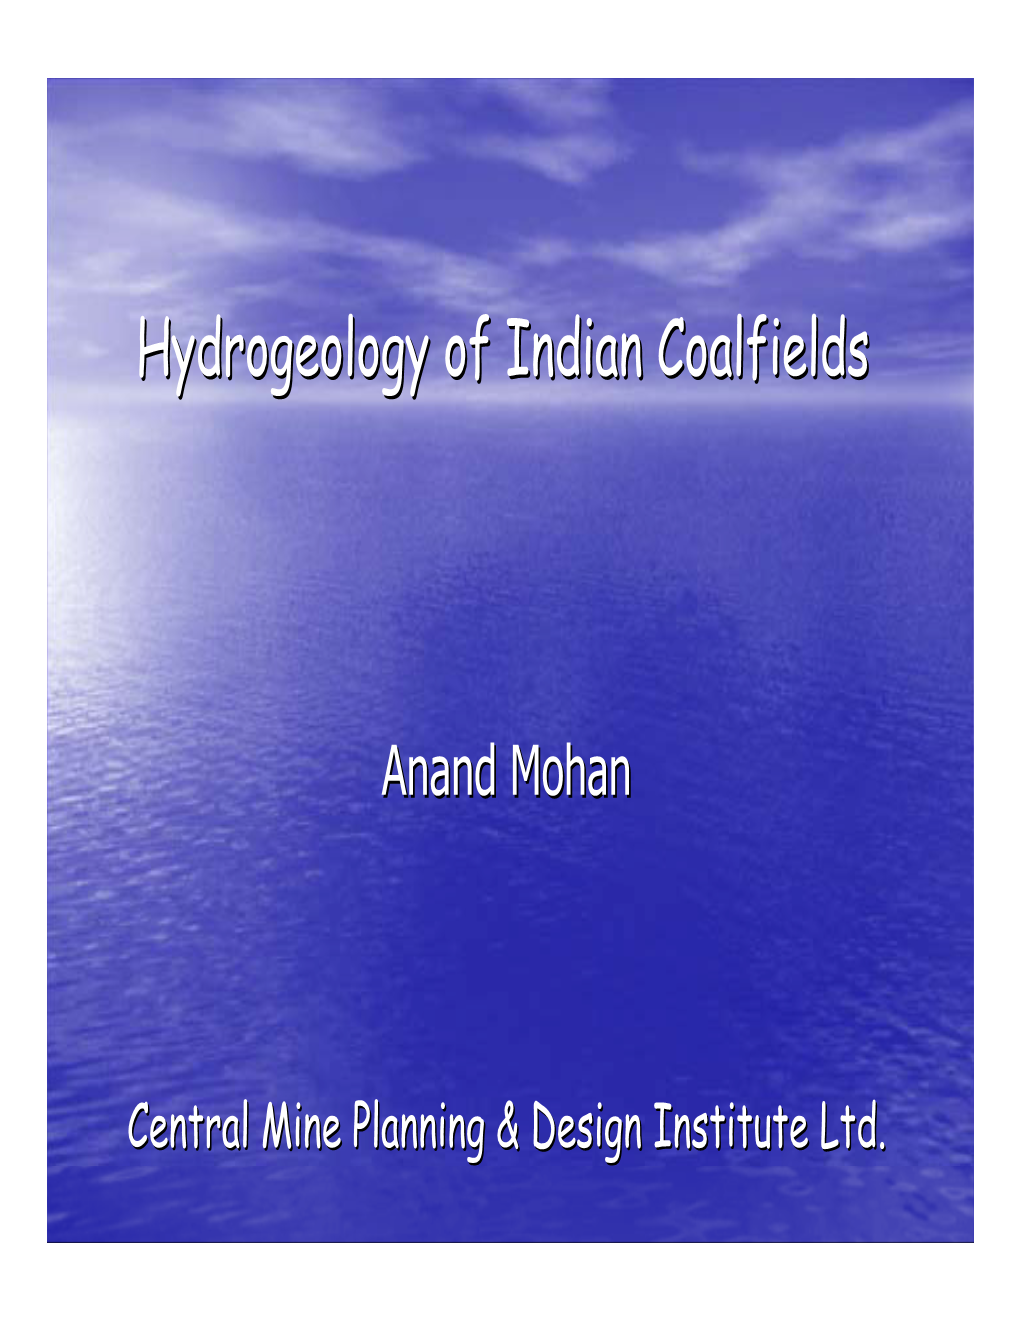 Hydrogeology of Indian Coalfields Hydrogeology of Indian Coalfields Hydrogeology of Indian Coalfields